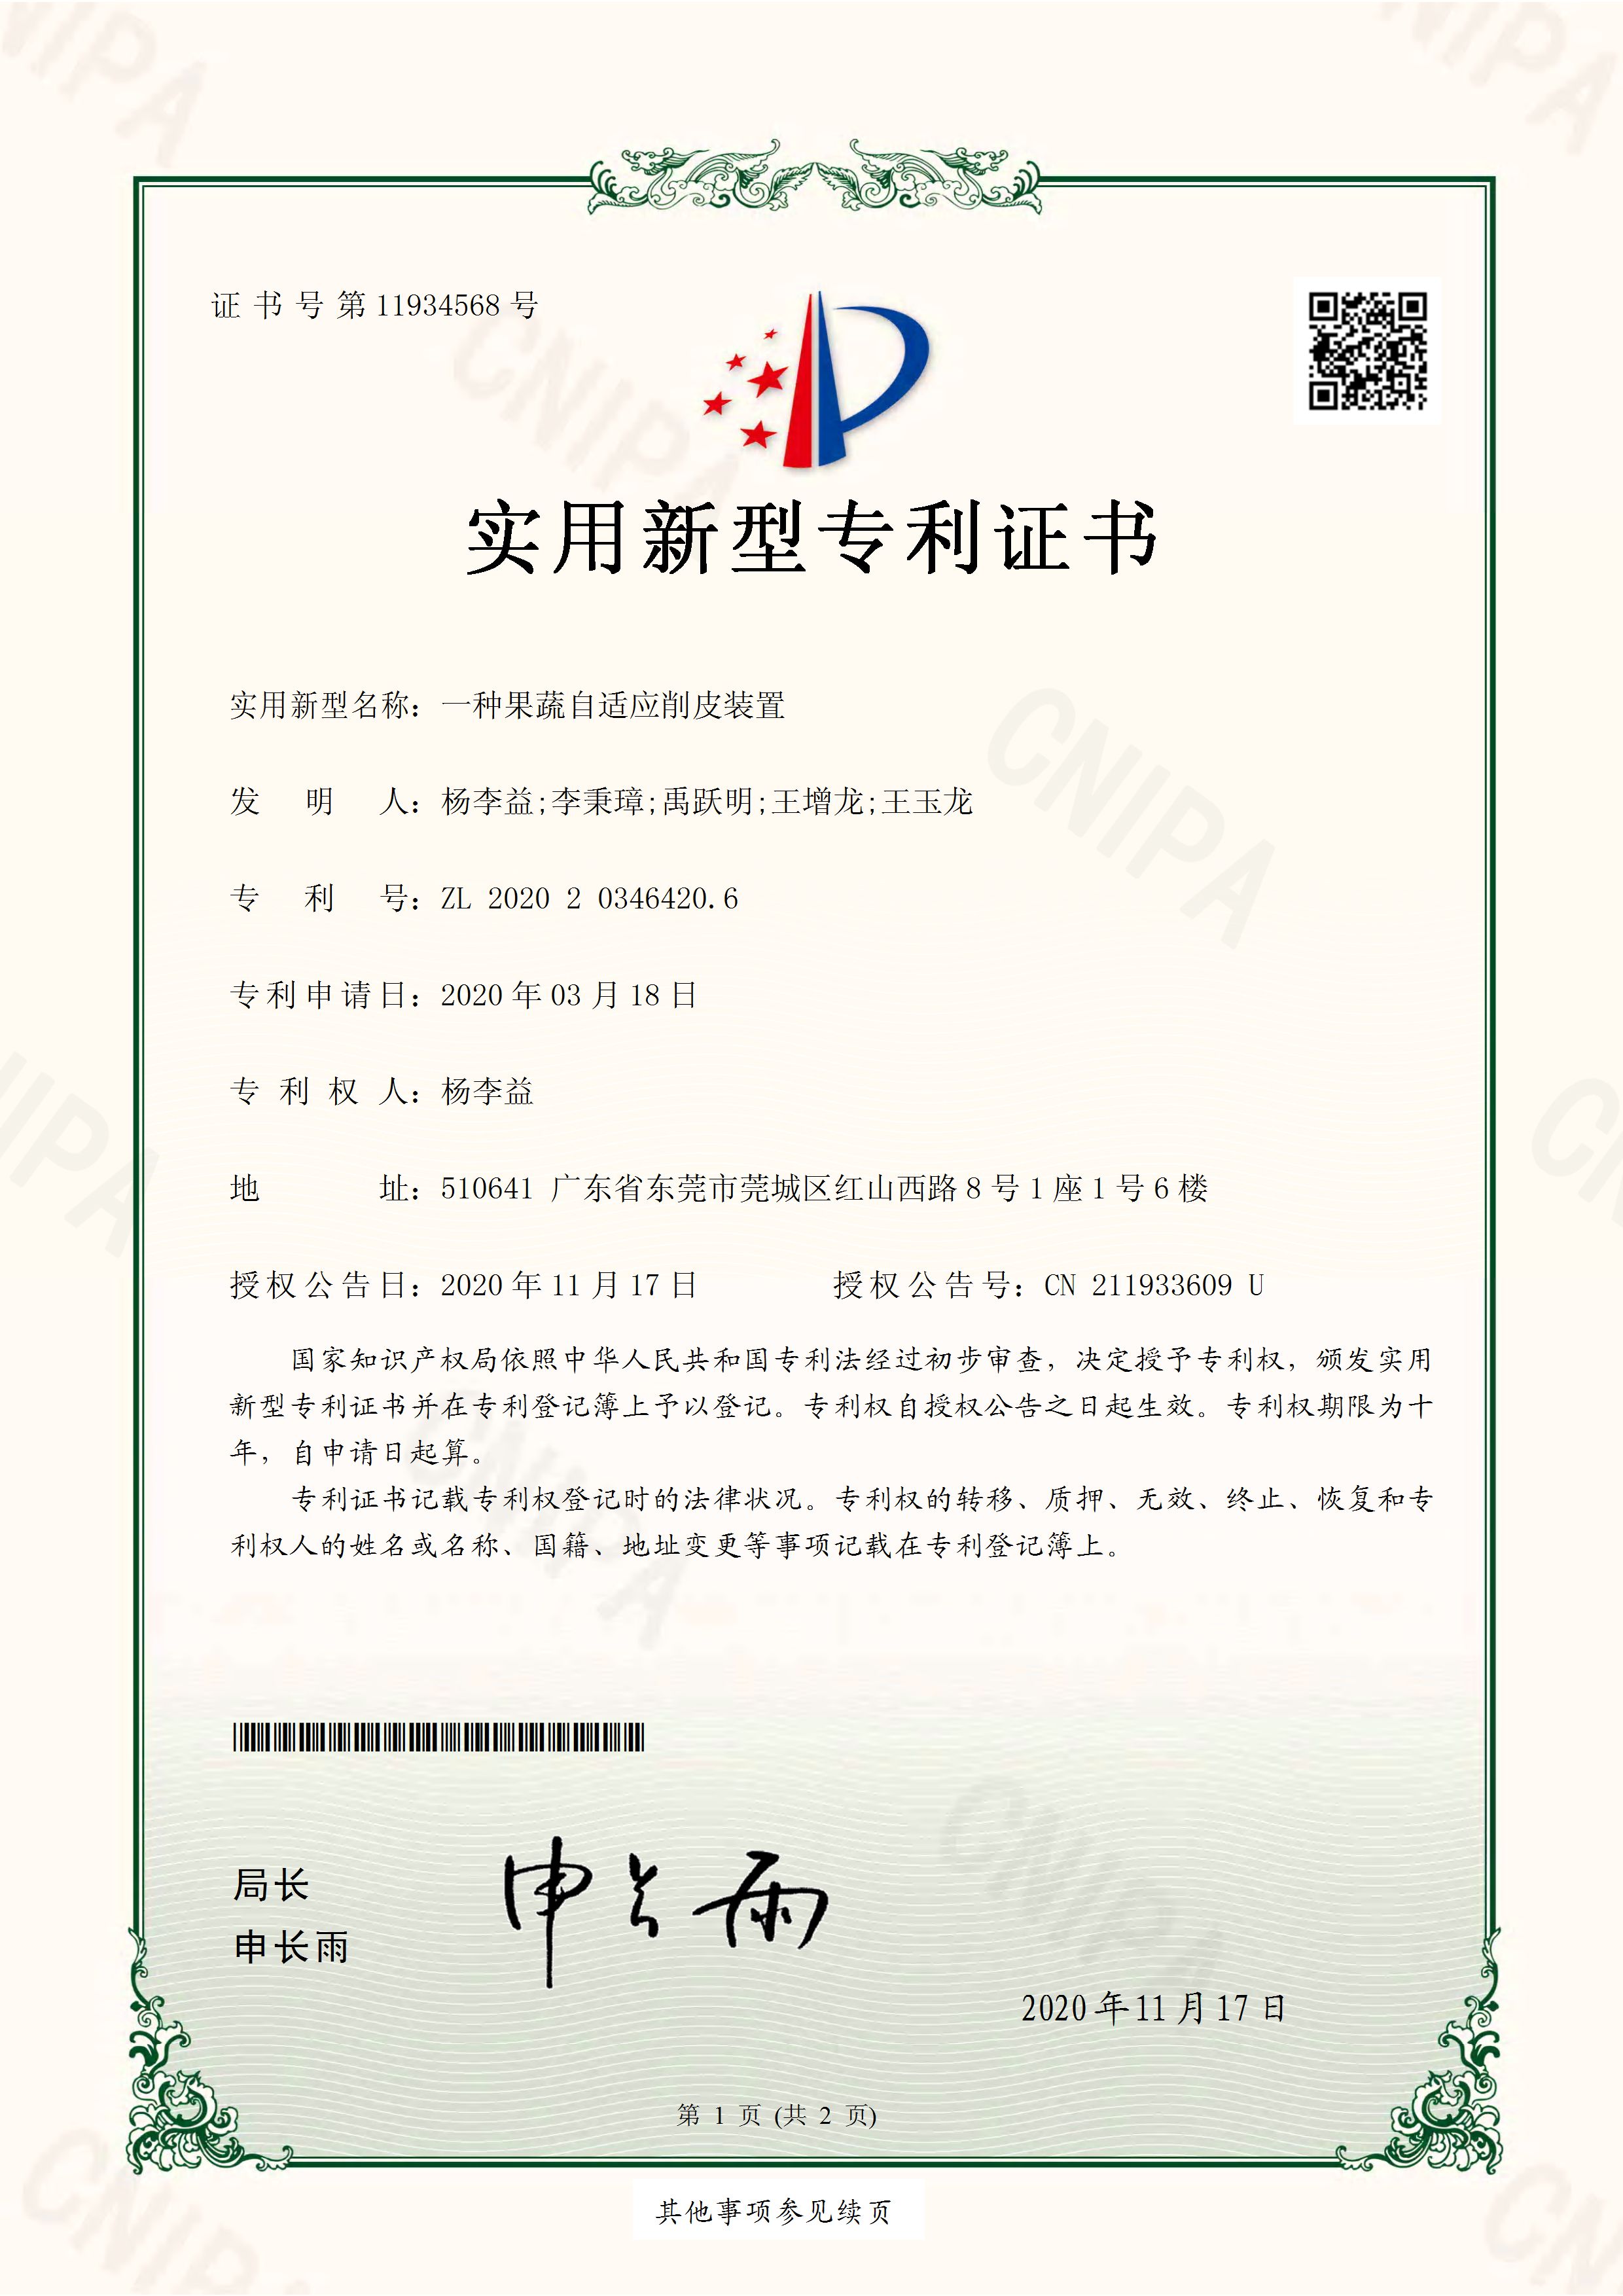 https://gzdaqiao.com/upload/杨李益专利之53——一种果蔬自适应削皮装置